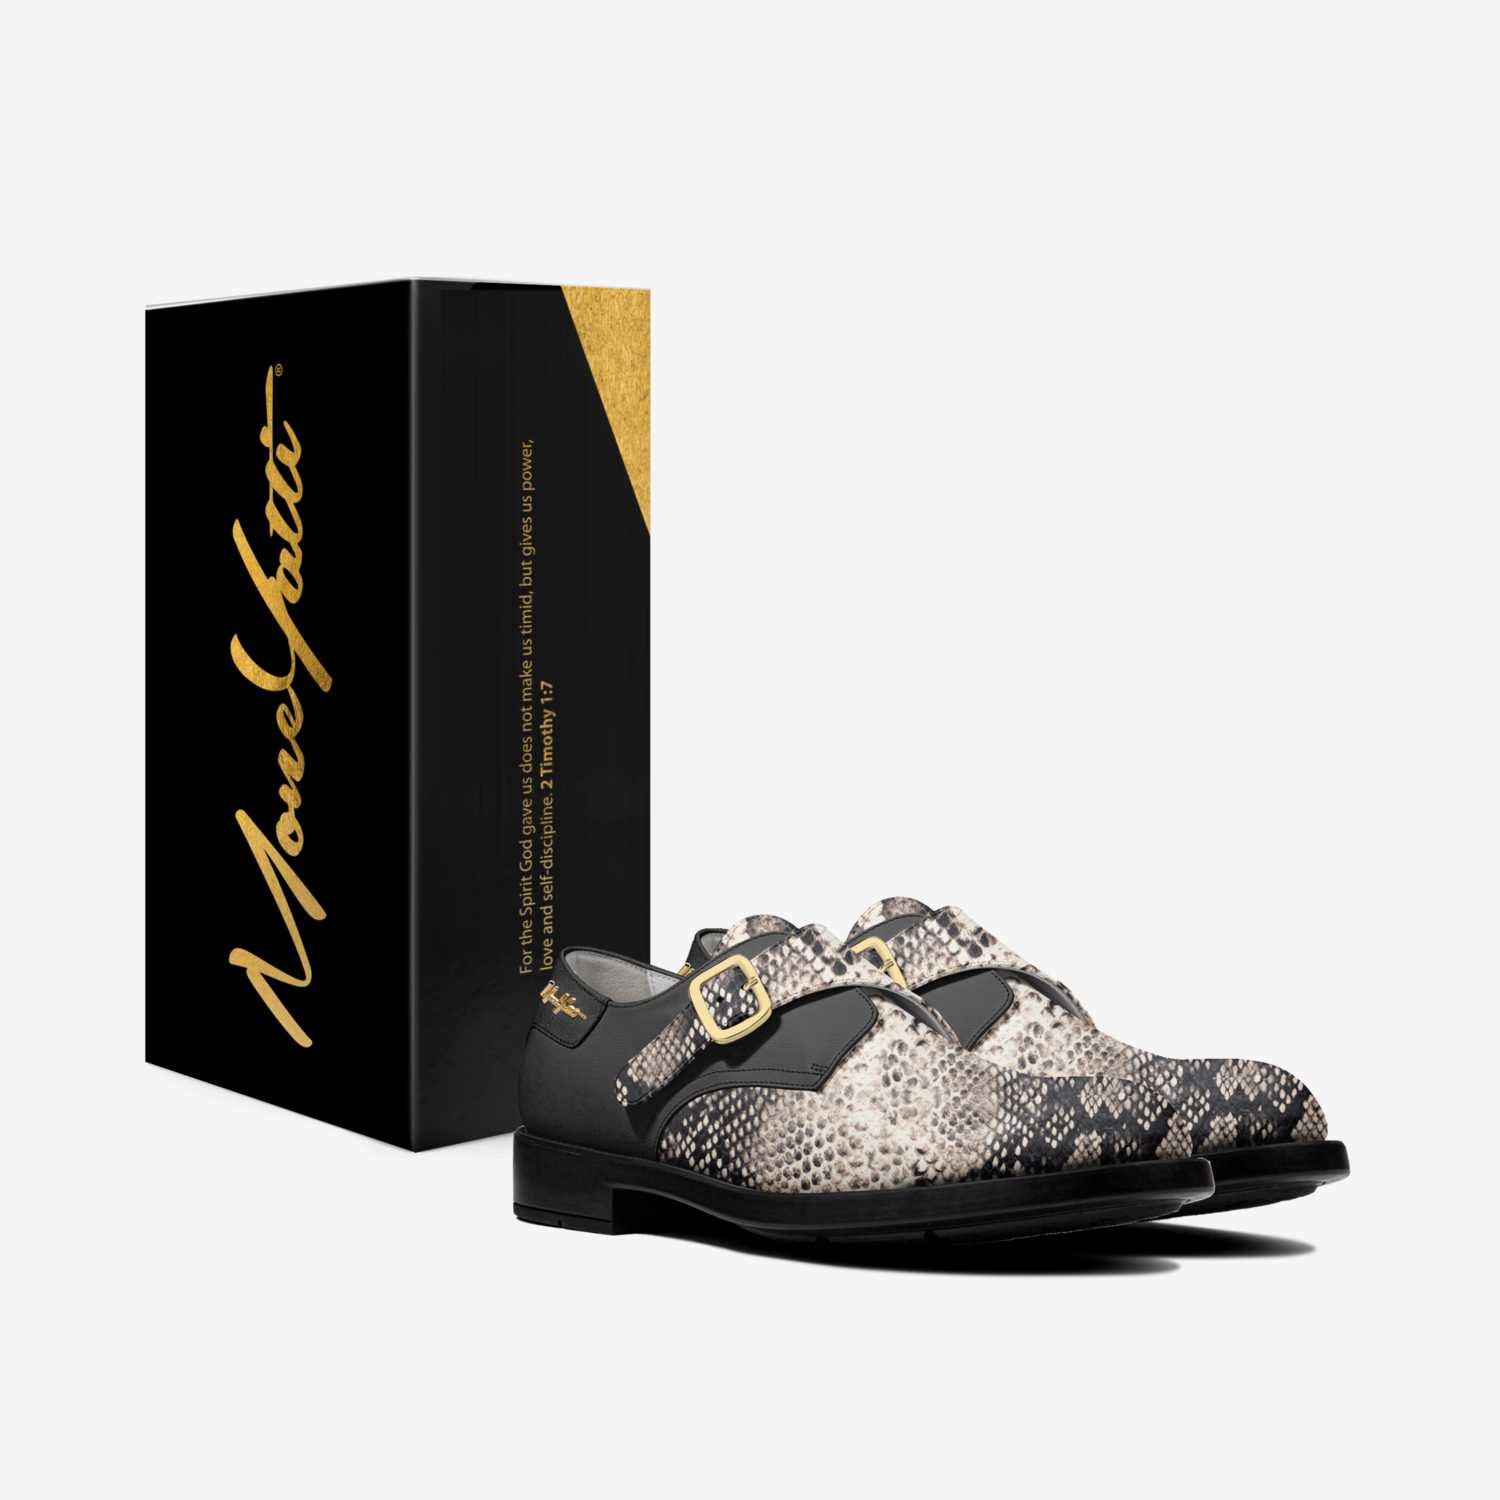 Elegantdrip 027 custom made in Italy shoes by Moneyatti Brand | Box view